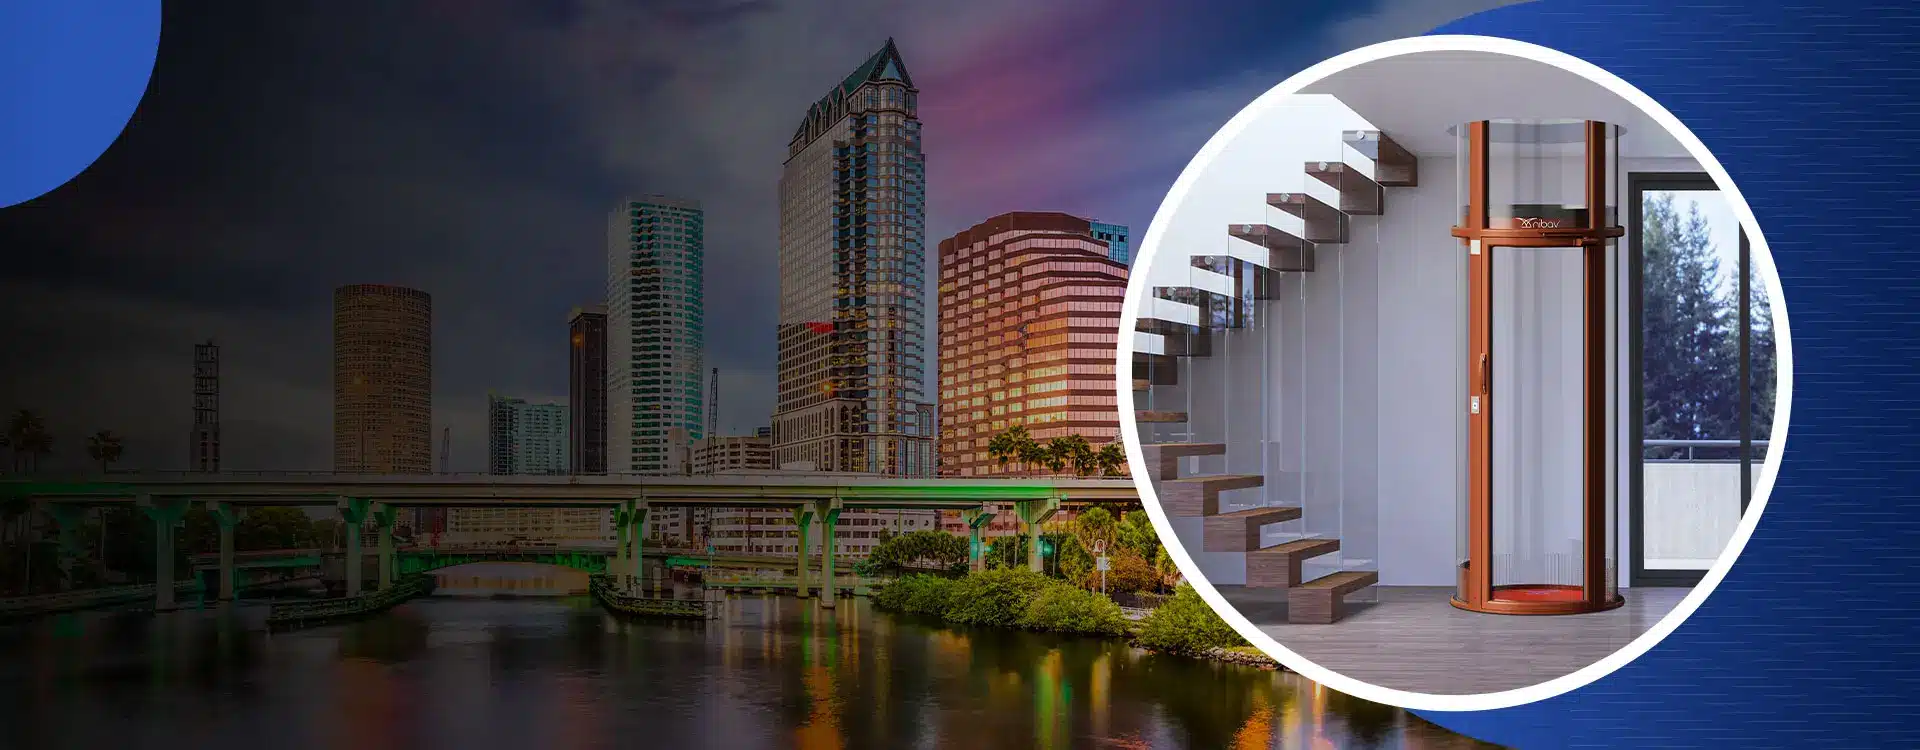 Domestic Lifts in Tampa - Nibav Lifts USA